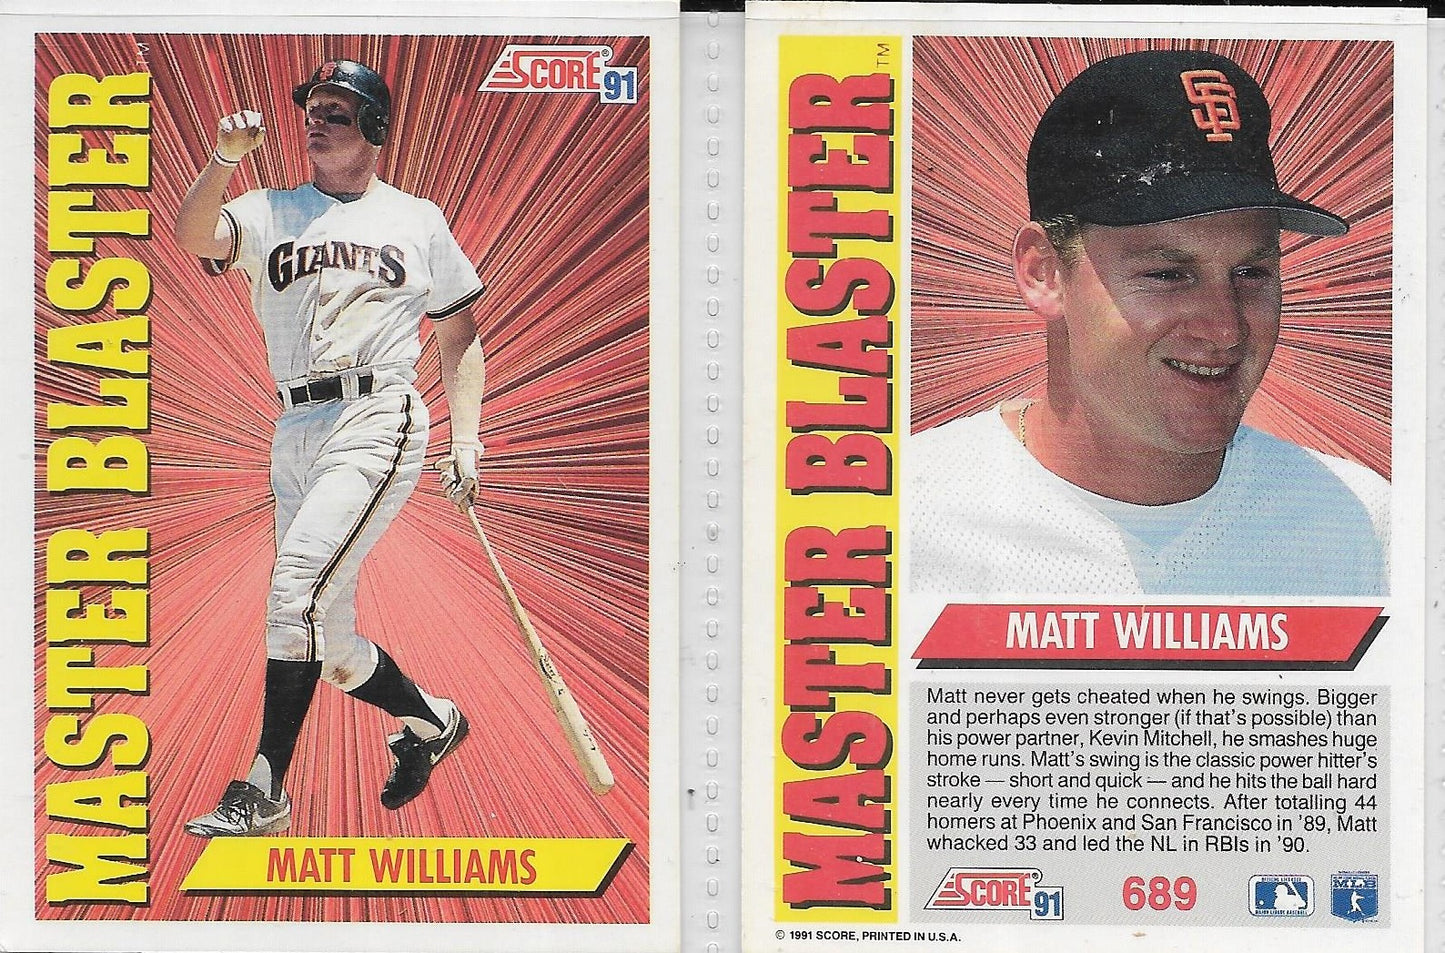 1991 Score #689 MATT WILLIAMS - SAN FRANCISCO GIANTS  "MASTER BLASTER"